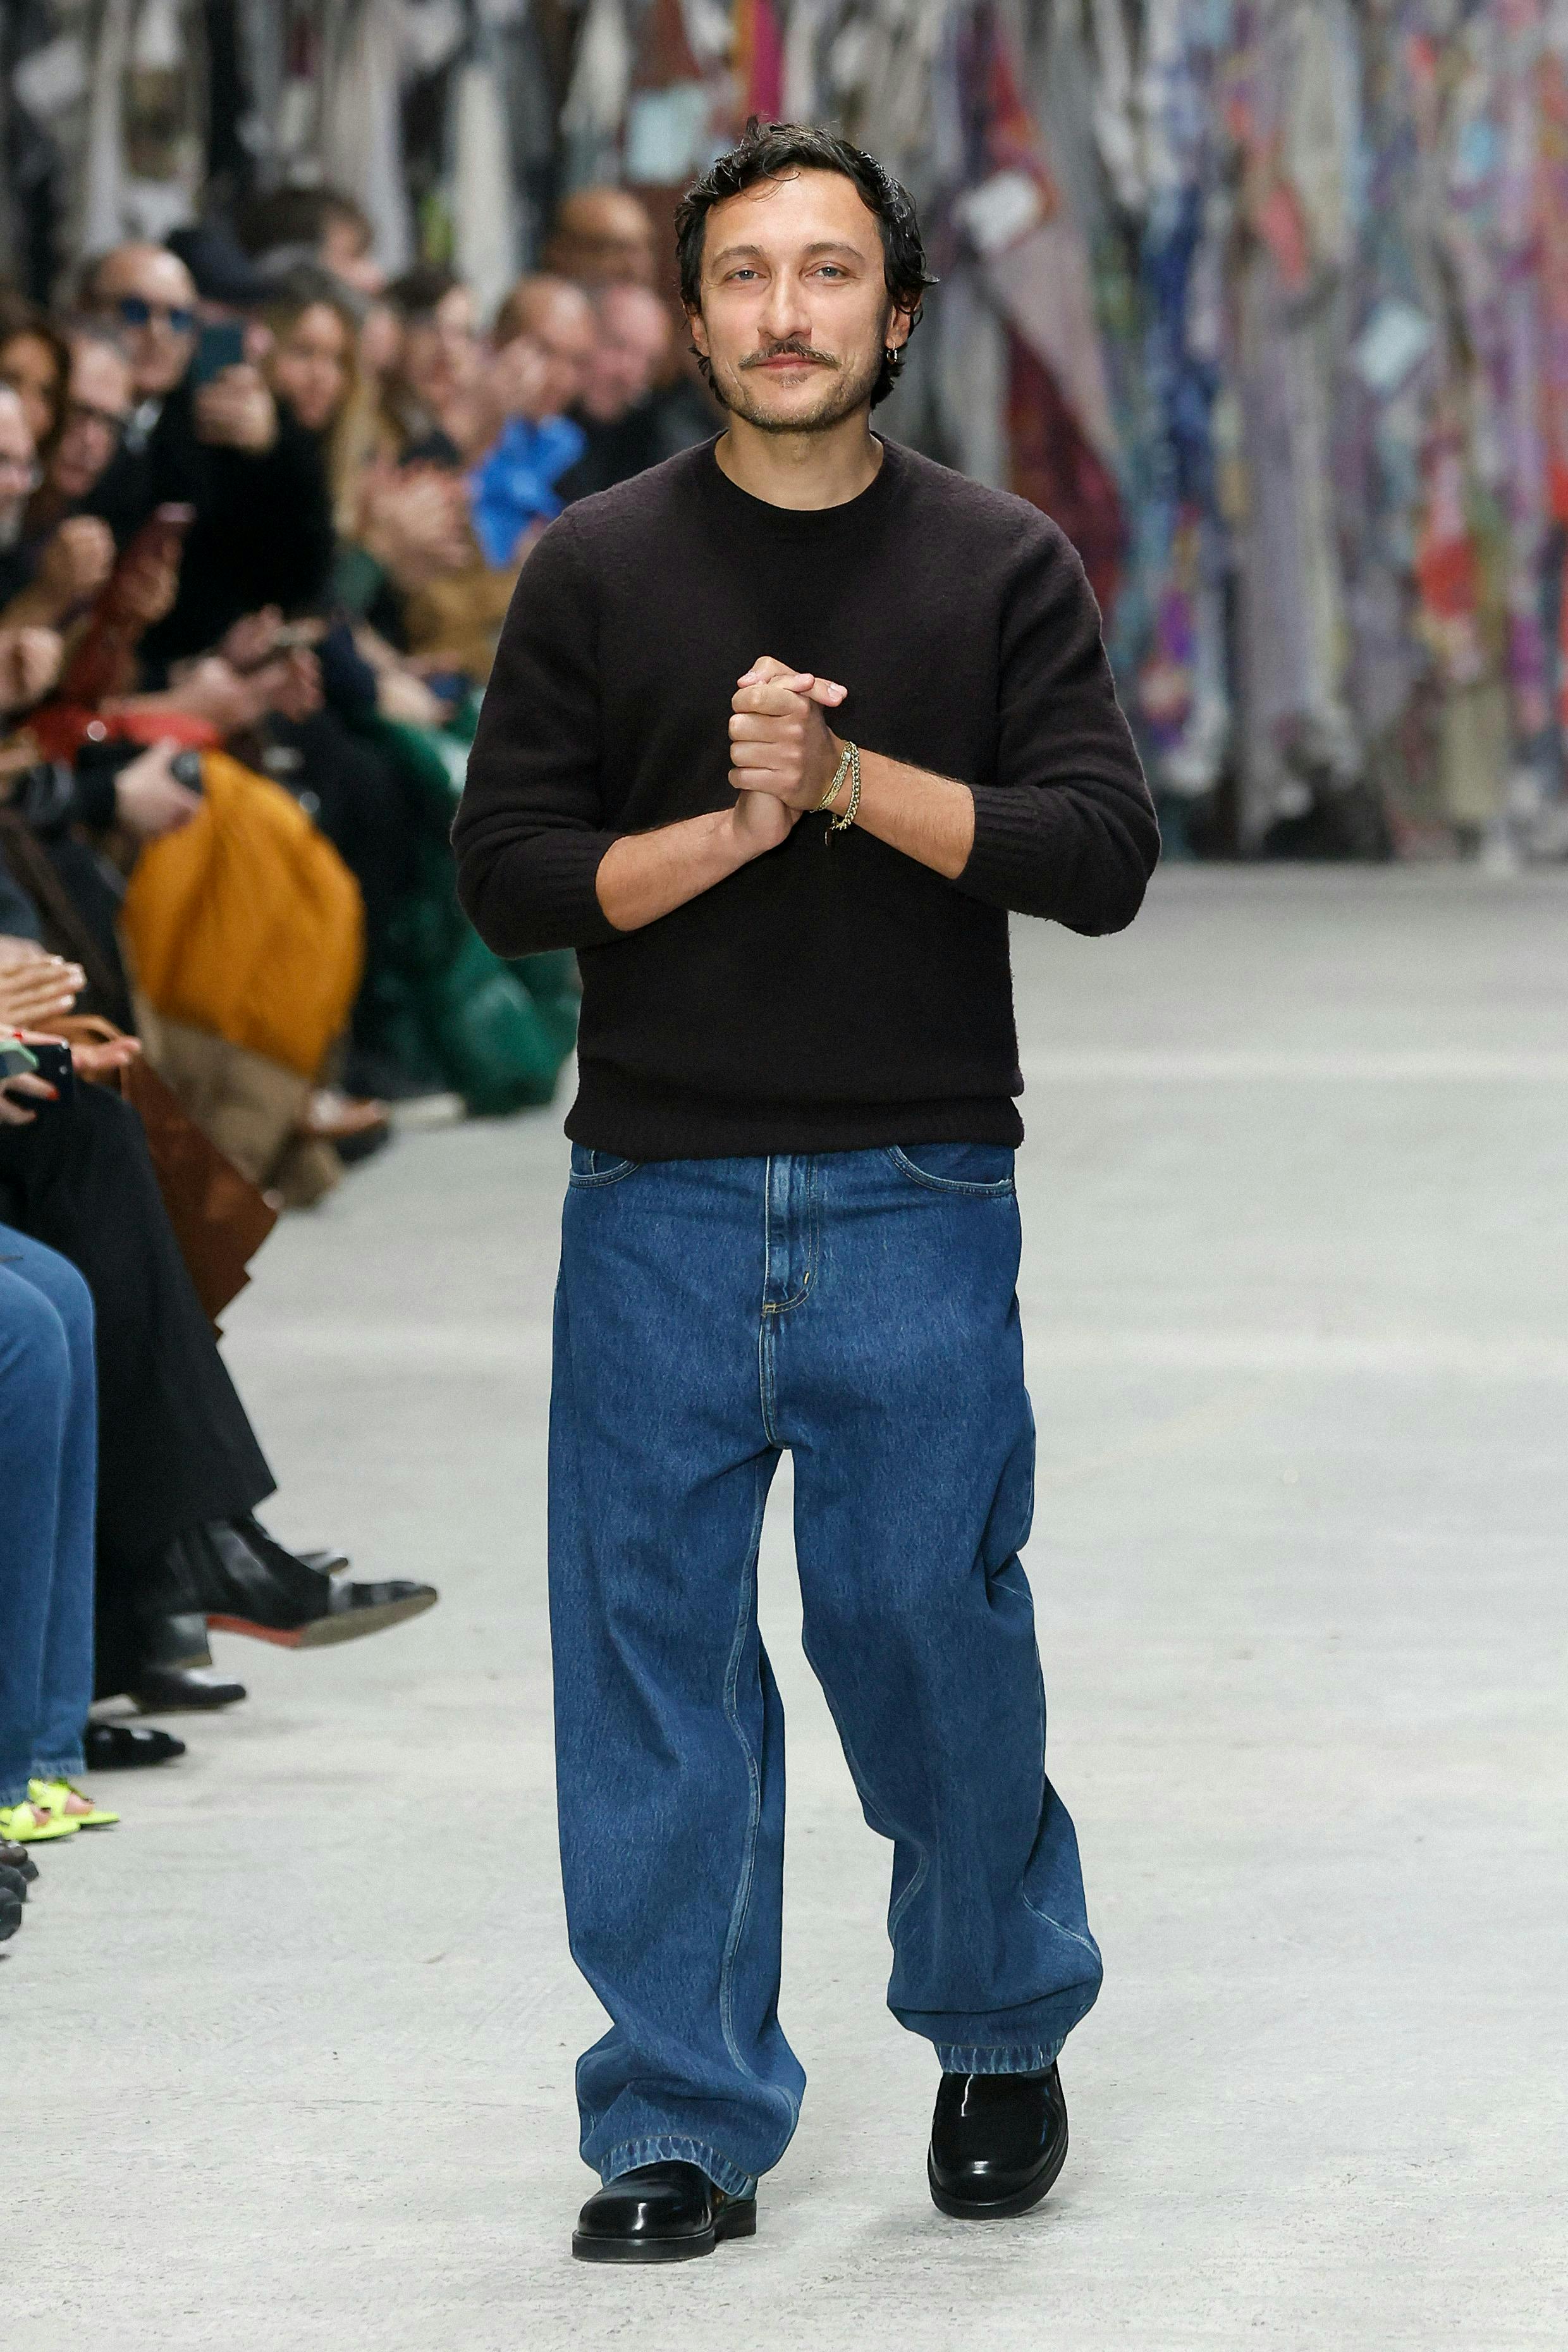 pants jeans adult male man person fashion standing sweater handbag